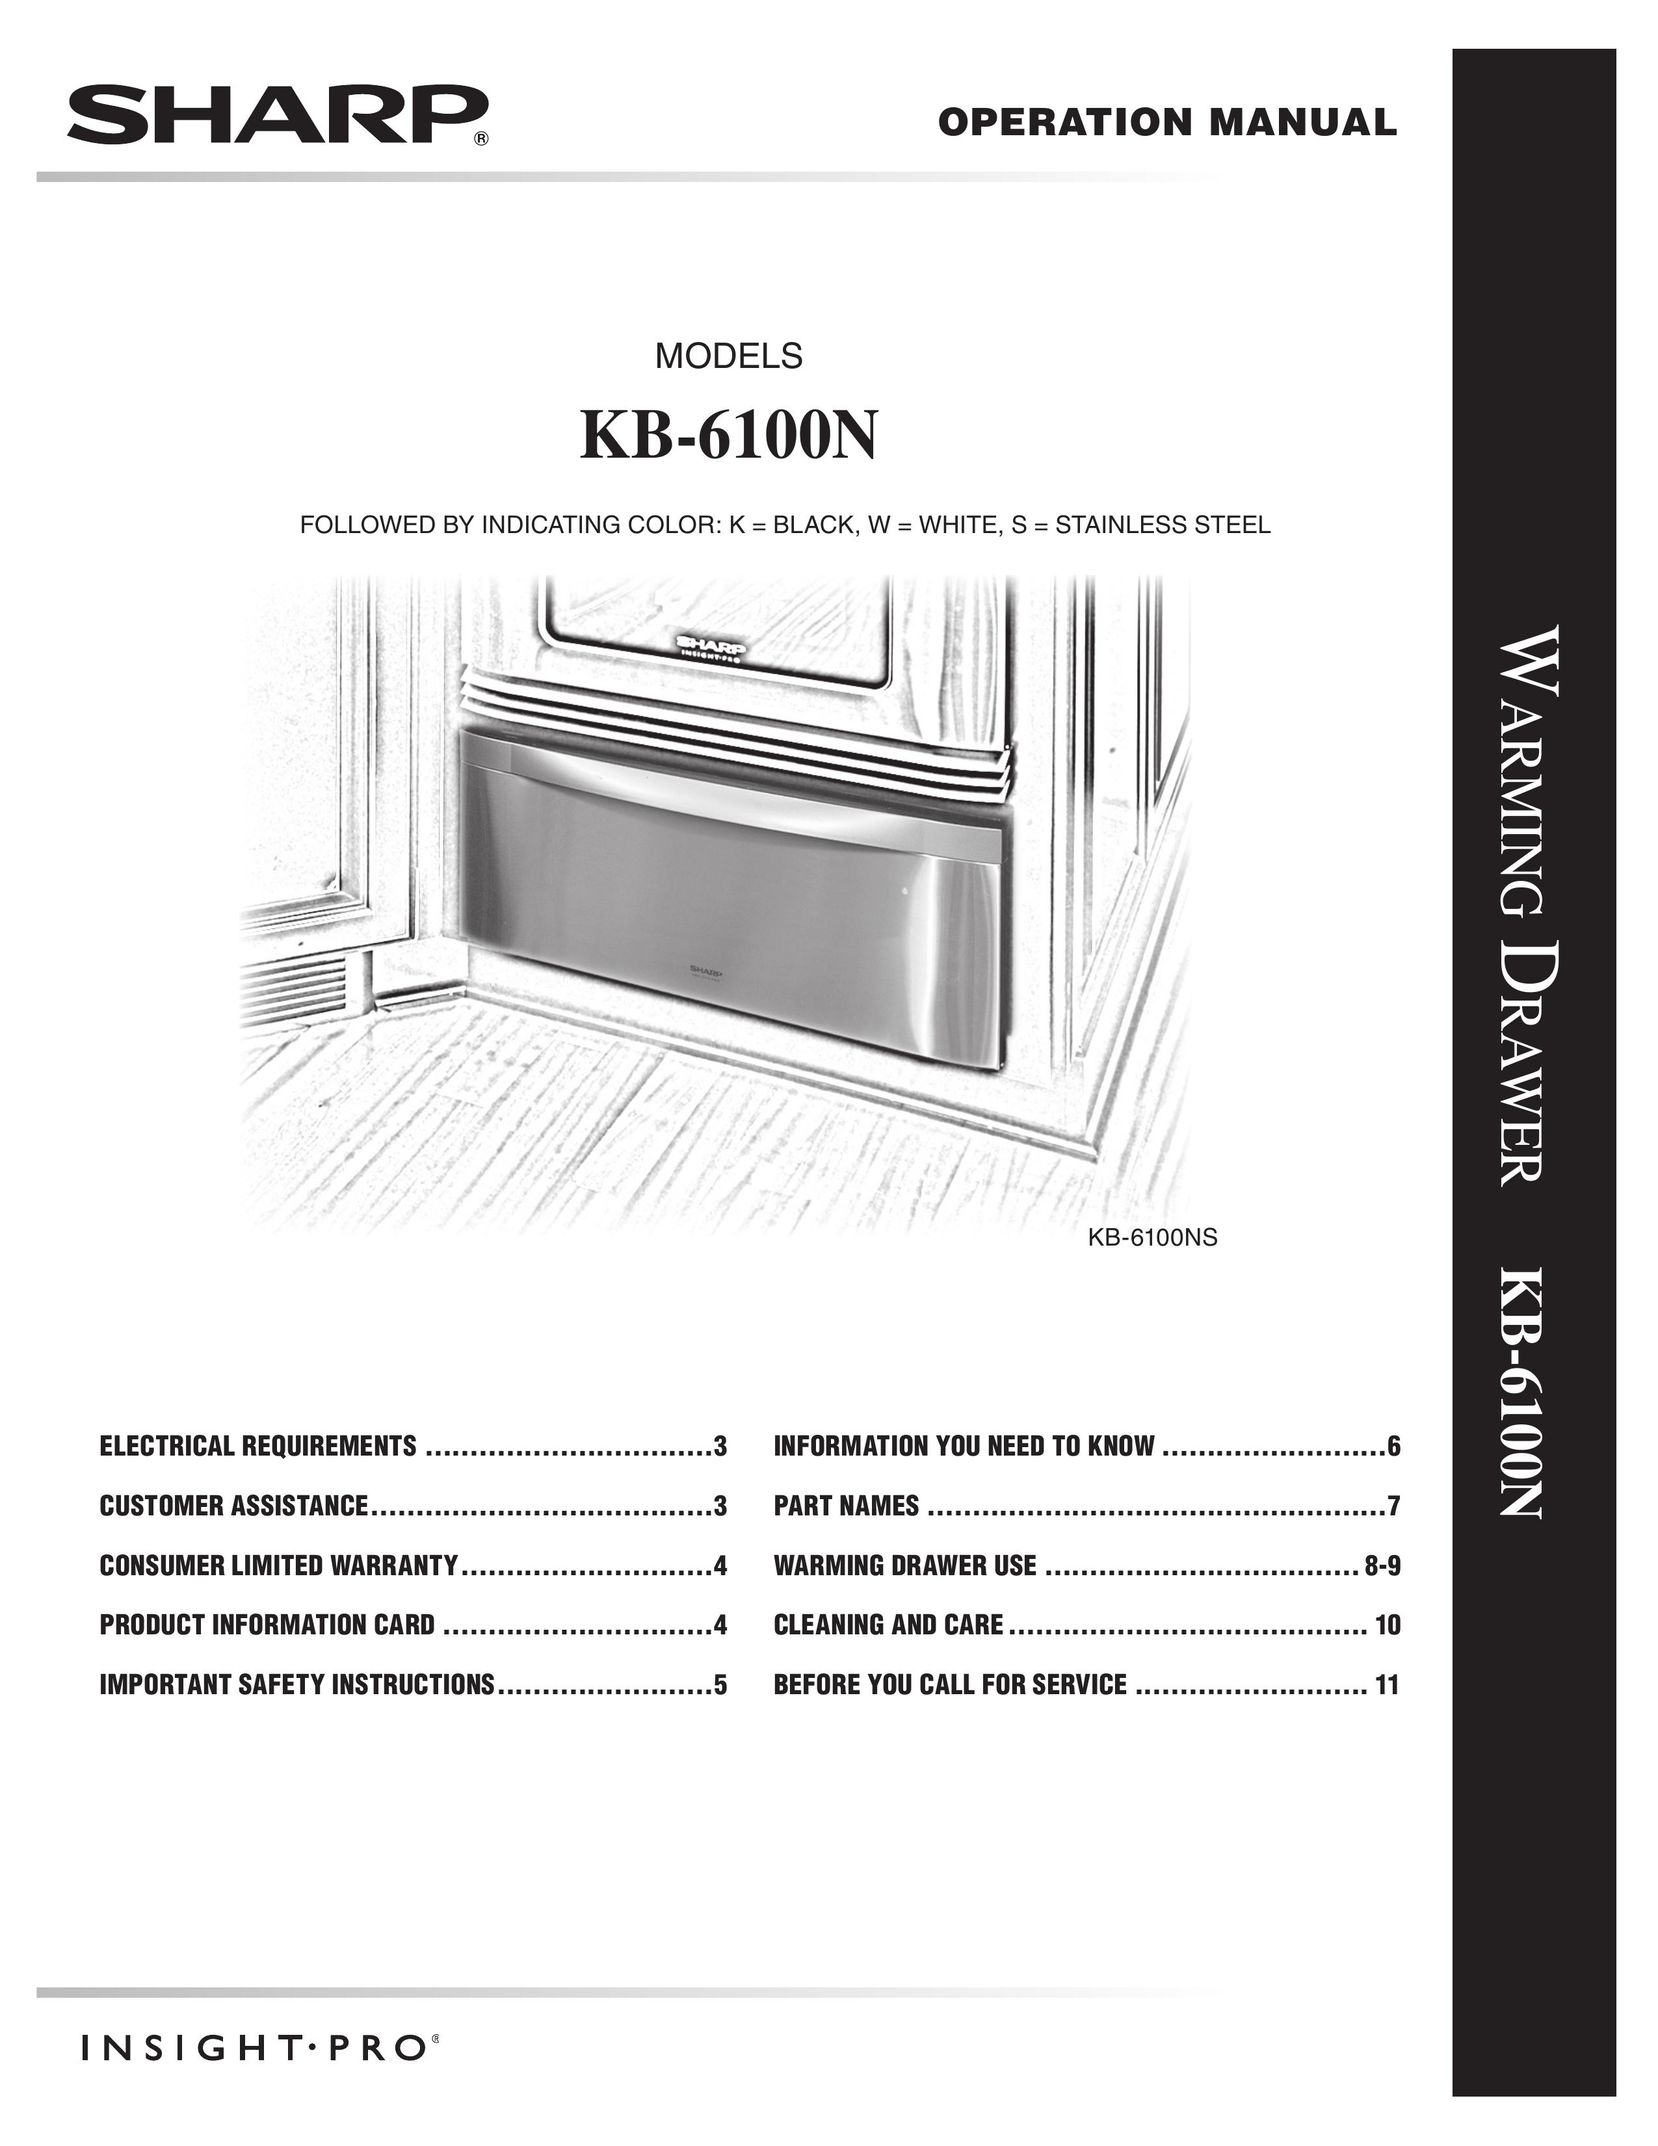 Sharp KB-6100NS Food Warmer User Manual